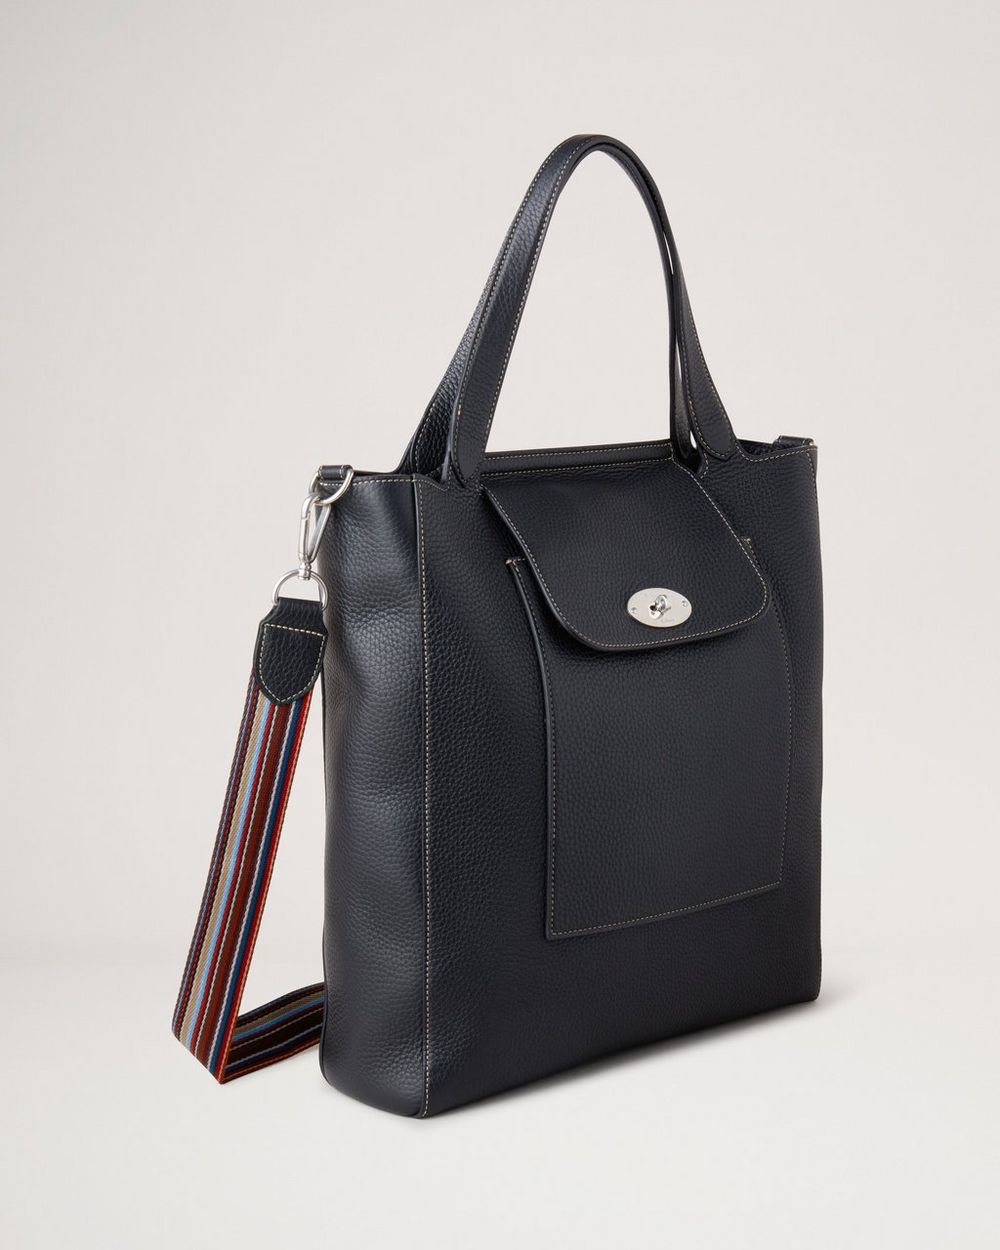 Paul Smith Bag Bucket, Soft Leather Bag